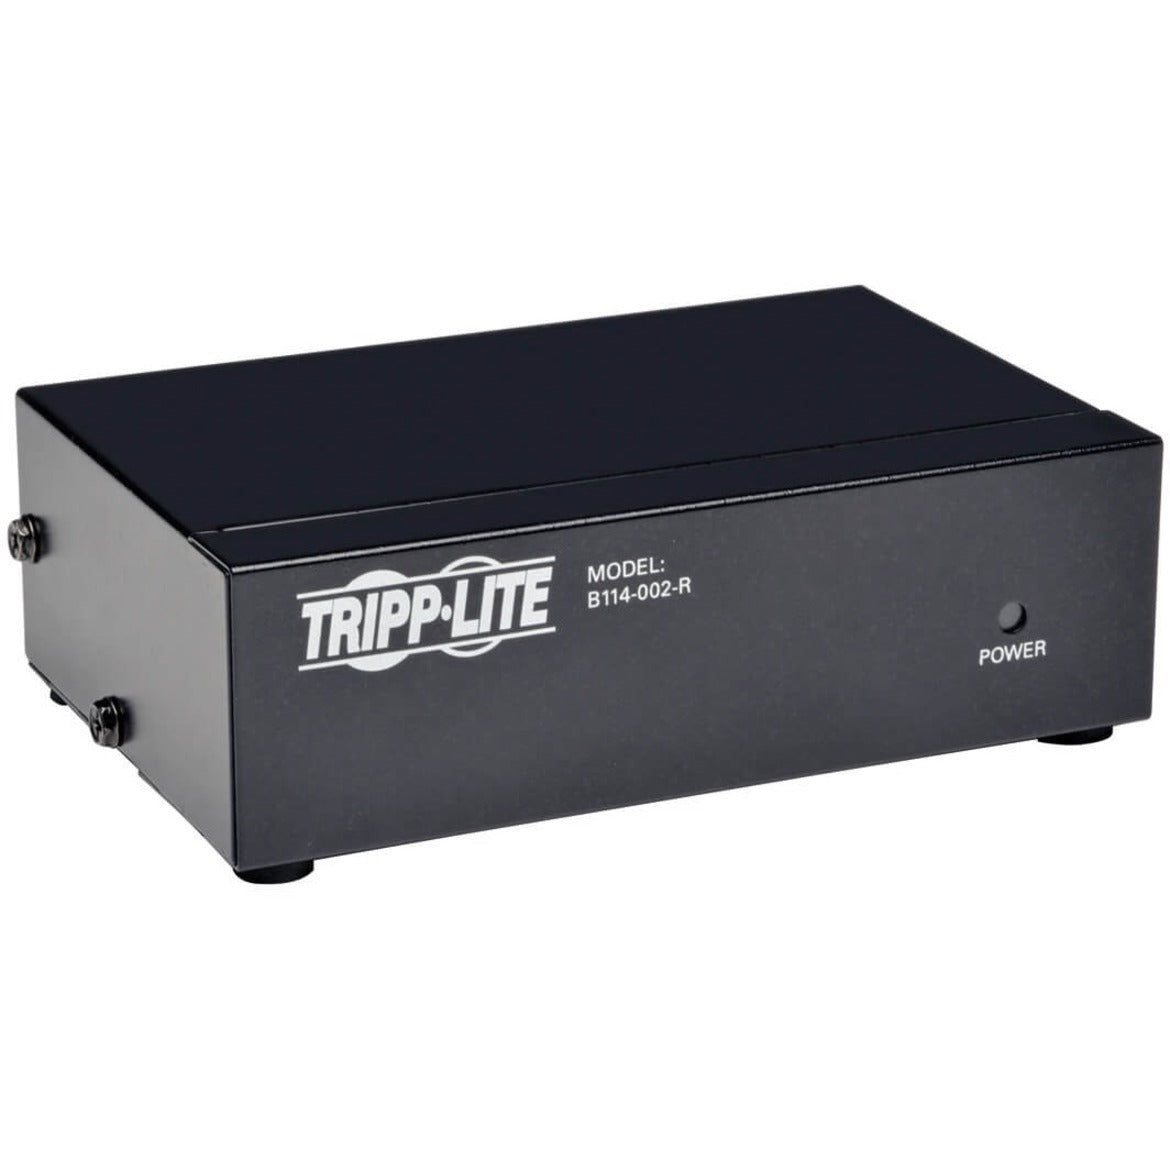 Tripp Lite B114-002-R 双口 VGA/SVGA 视频分配器，HD15，黑色，350 MHz 最大视频带宽 特立普利特 B114-002-R